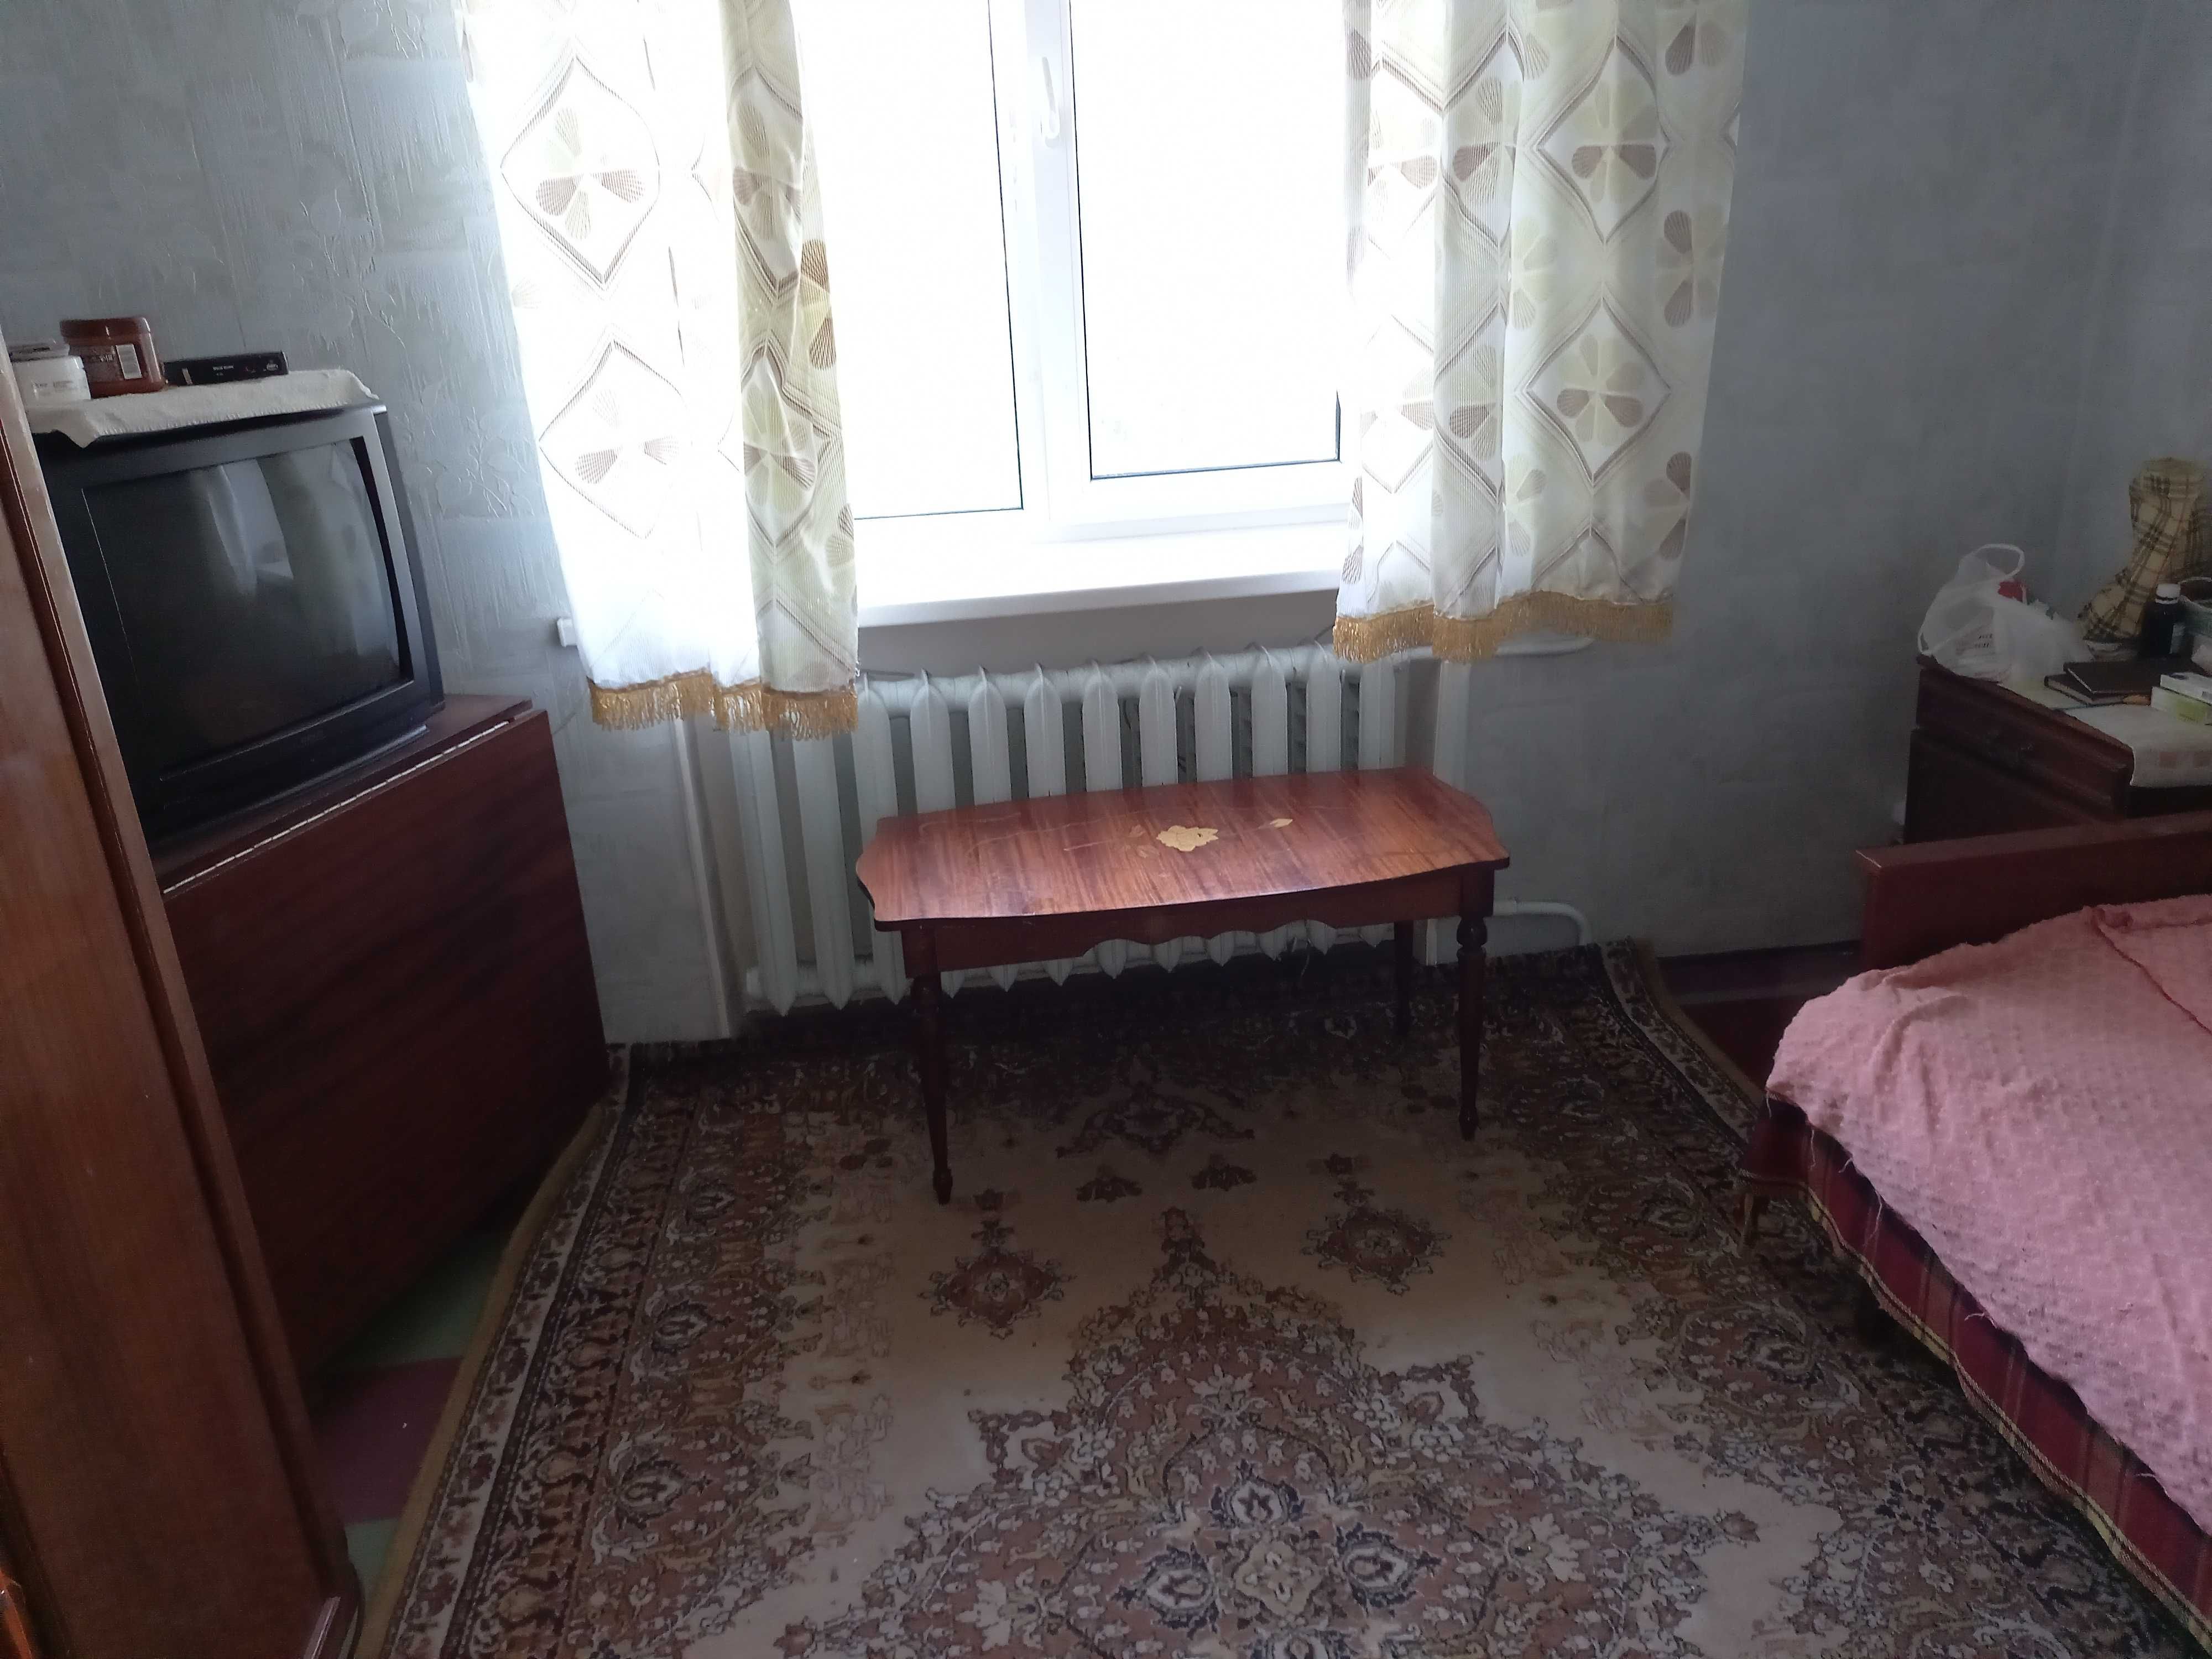 Продам 3-х комнатную квартиру в р-не Ивана Мазепы